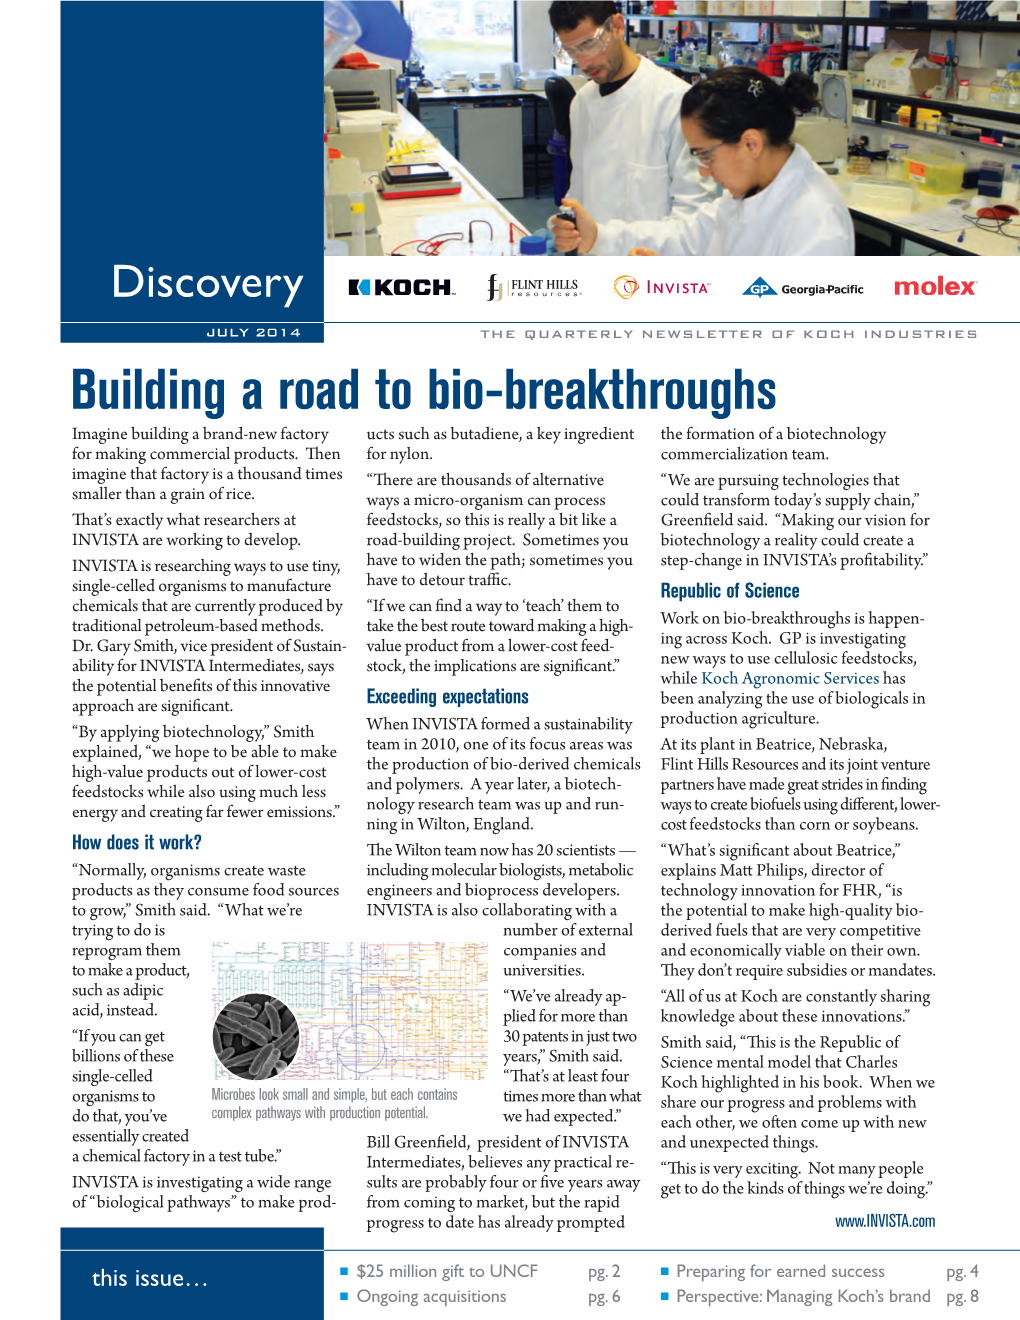 Building a Road to Bio-Breakthroughs